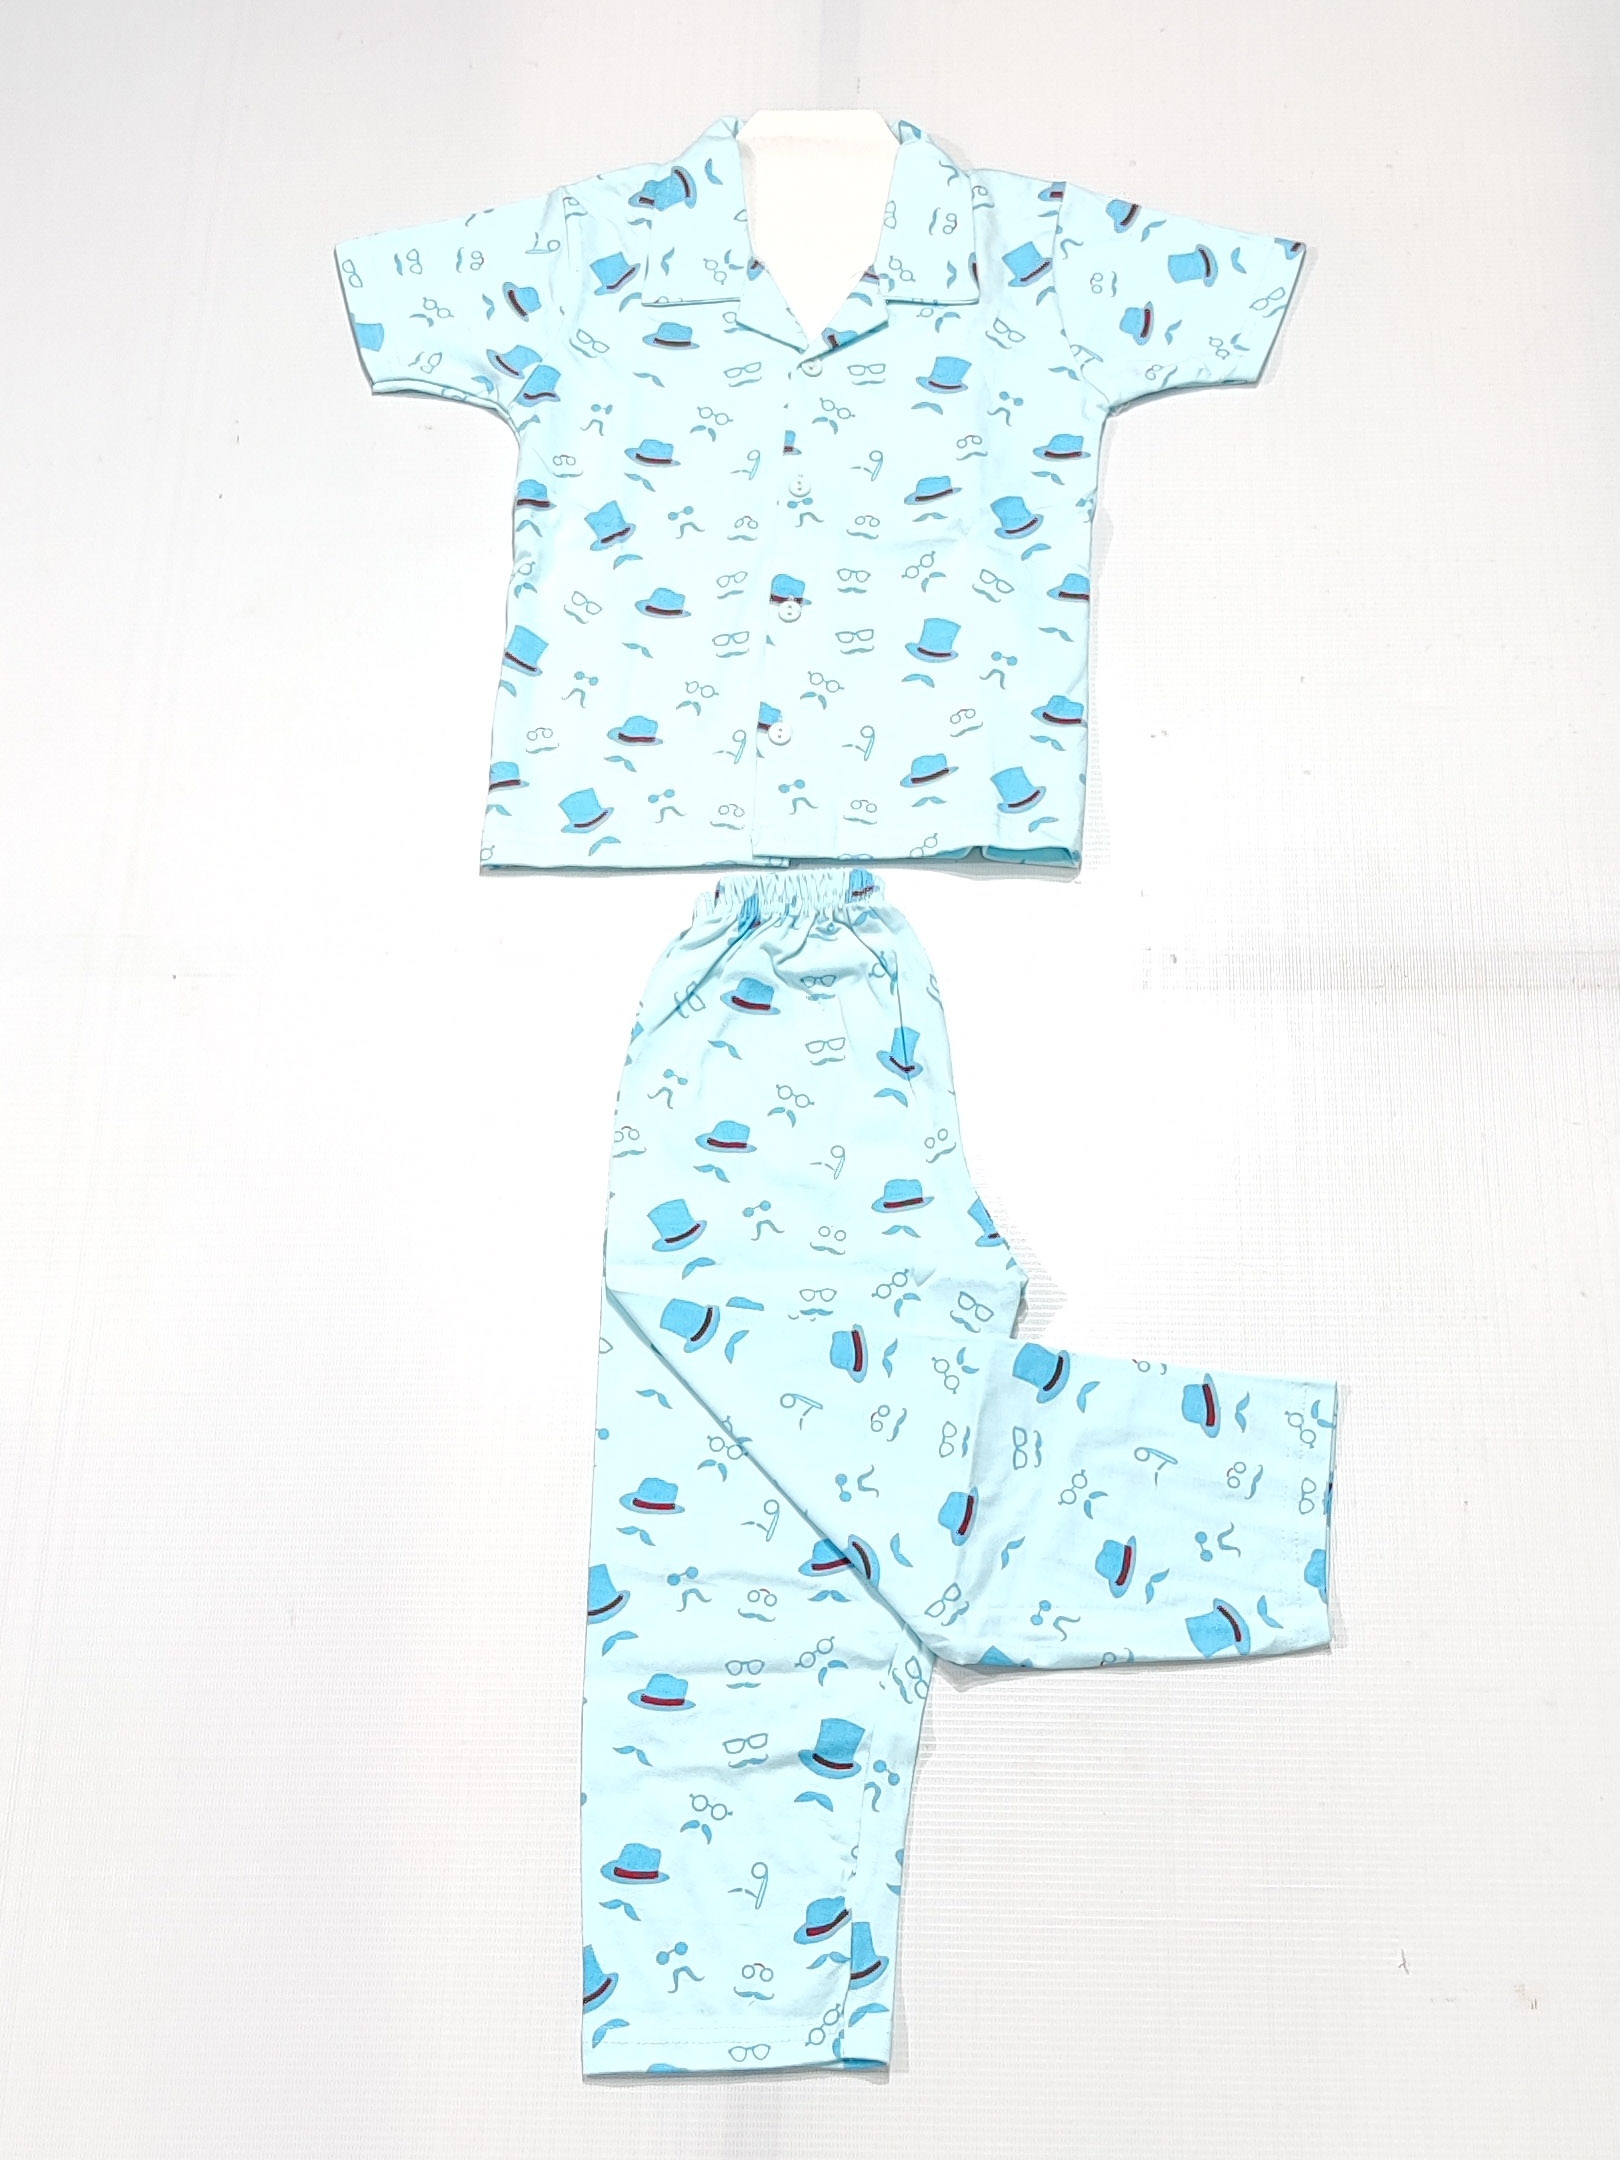 AAAKAR | Stylish Boy's Blue Graphic Printed Shirt And Pyjama Set